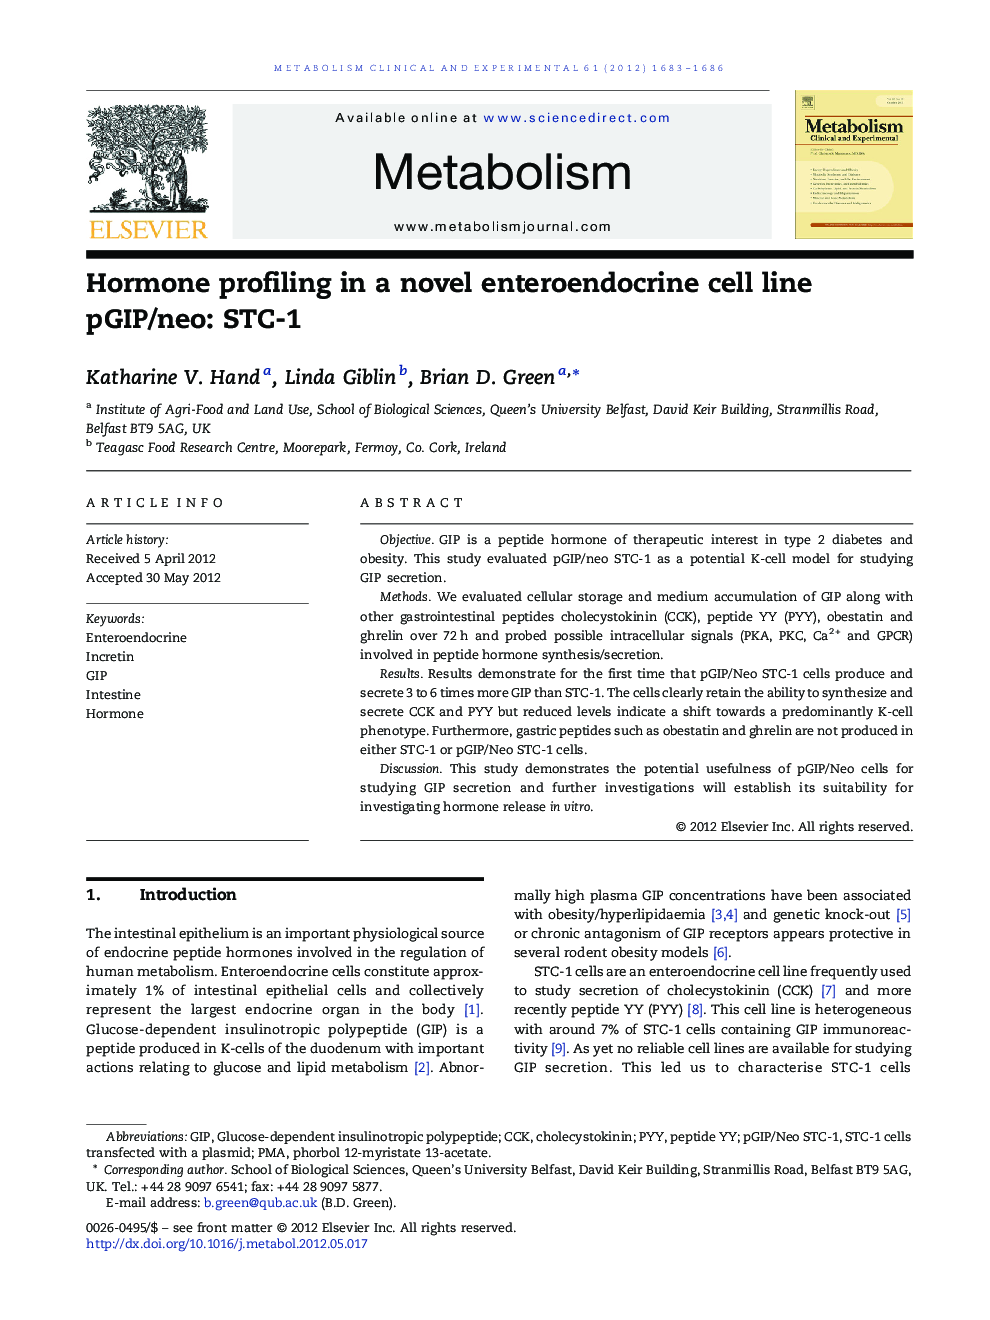 Hormone profiling in a novel enteroendocrine cell line pGIP/neo: STC-1